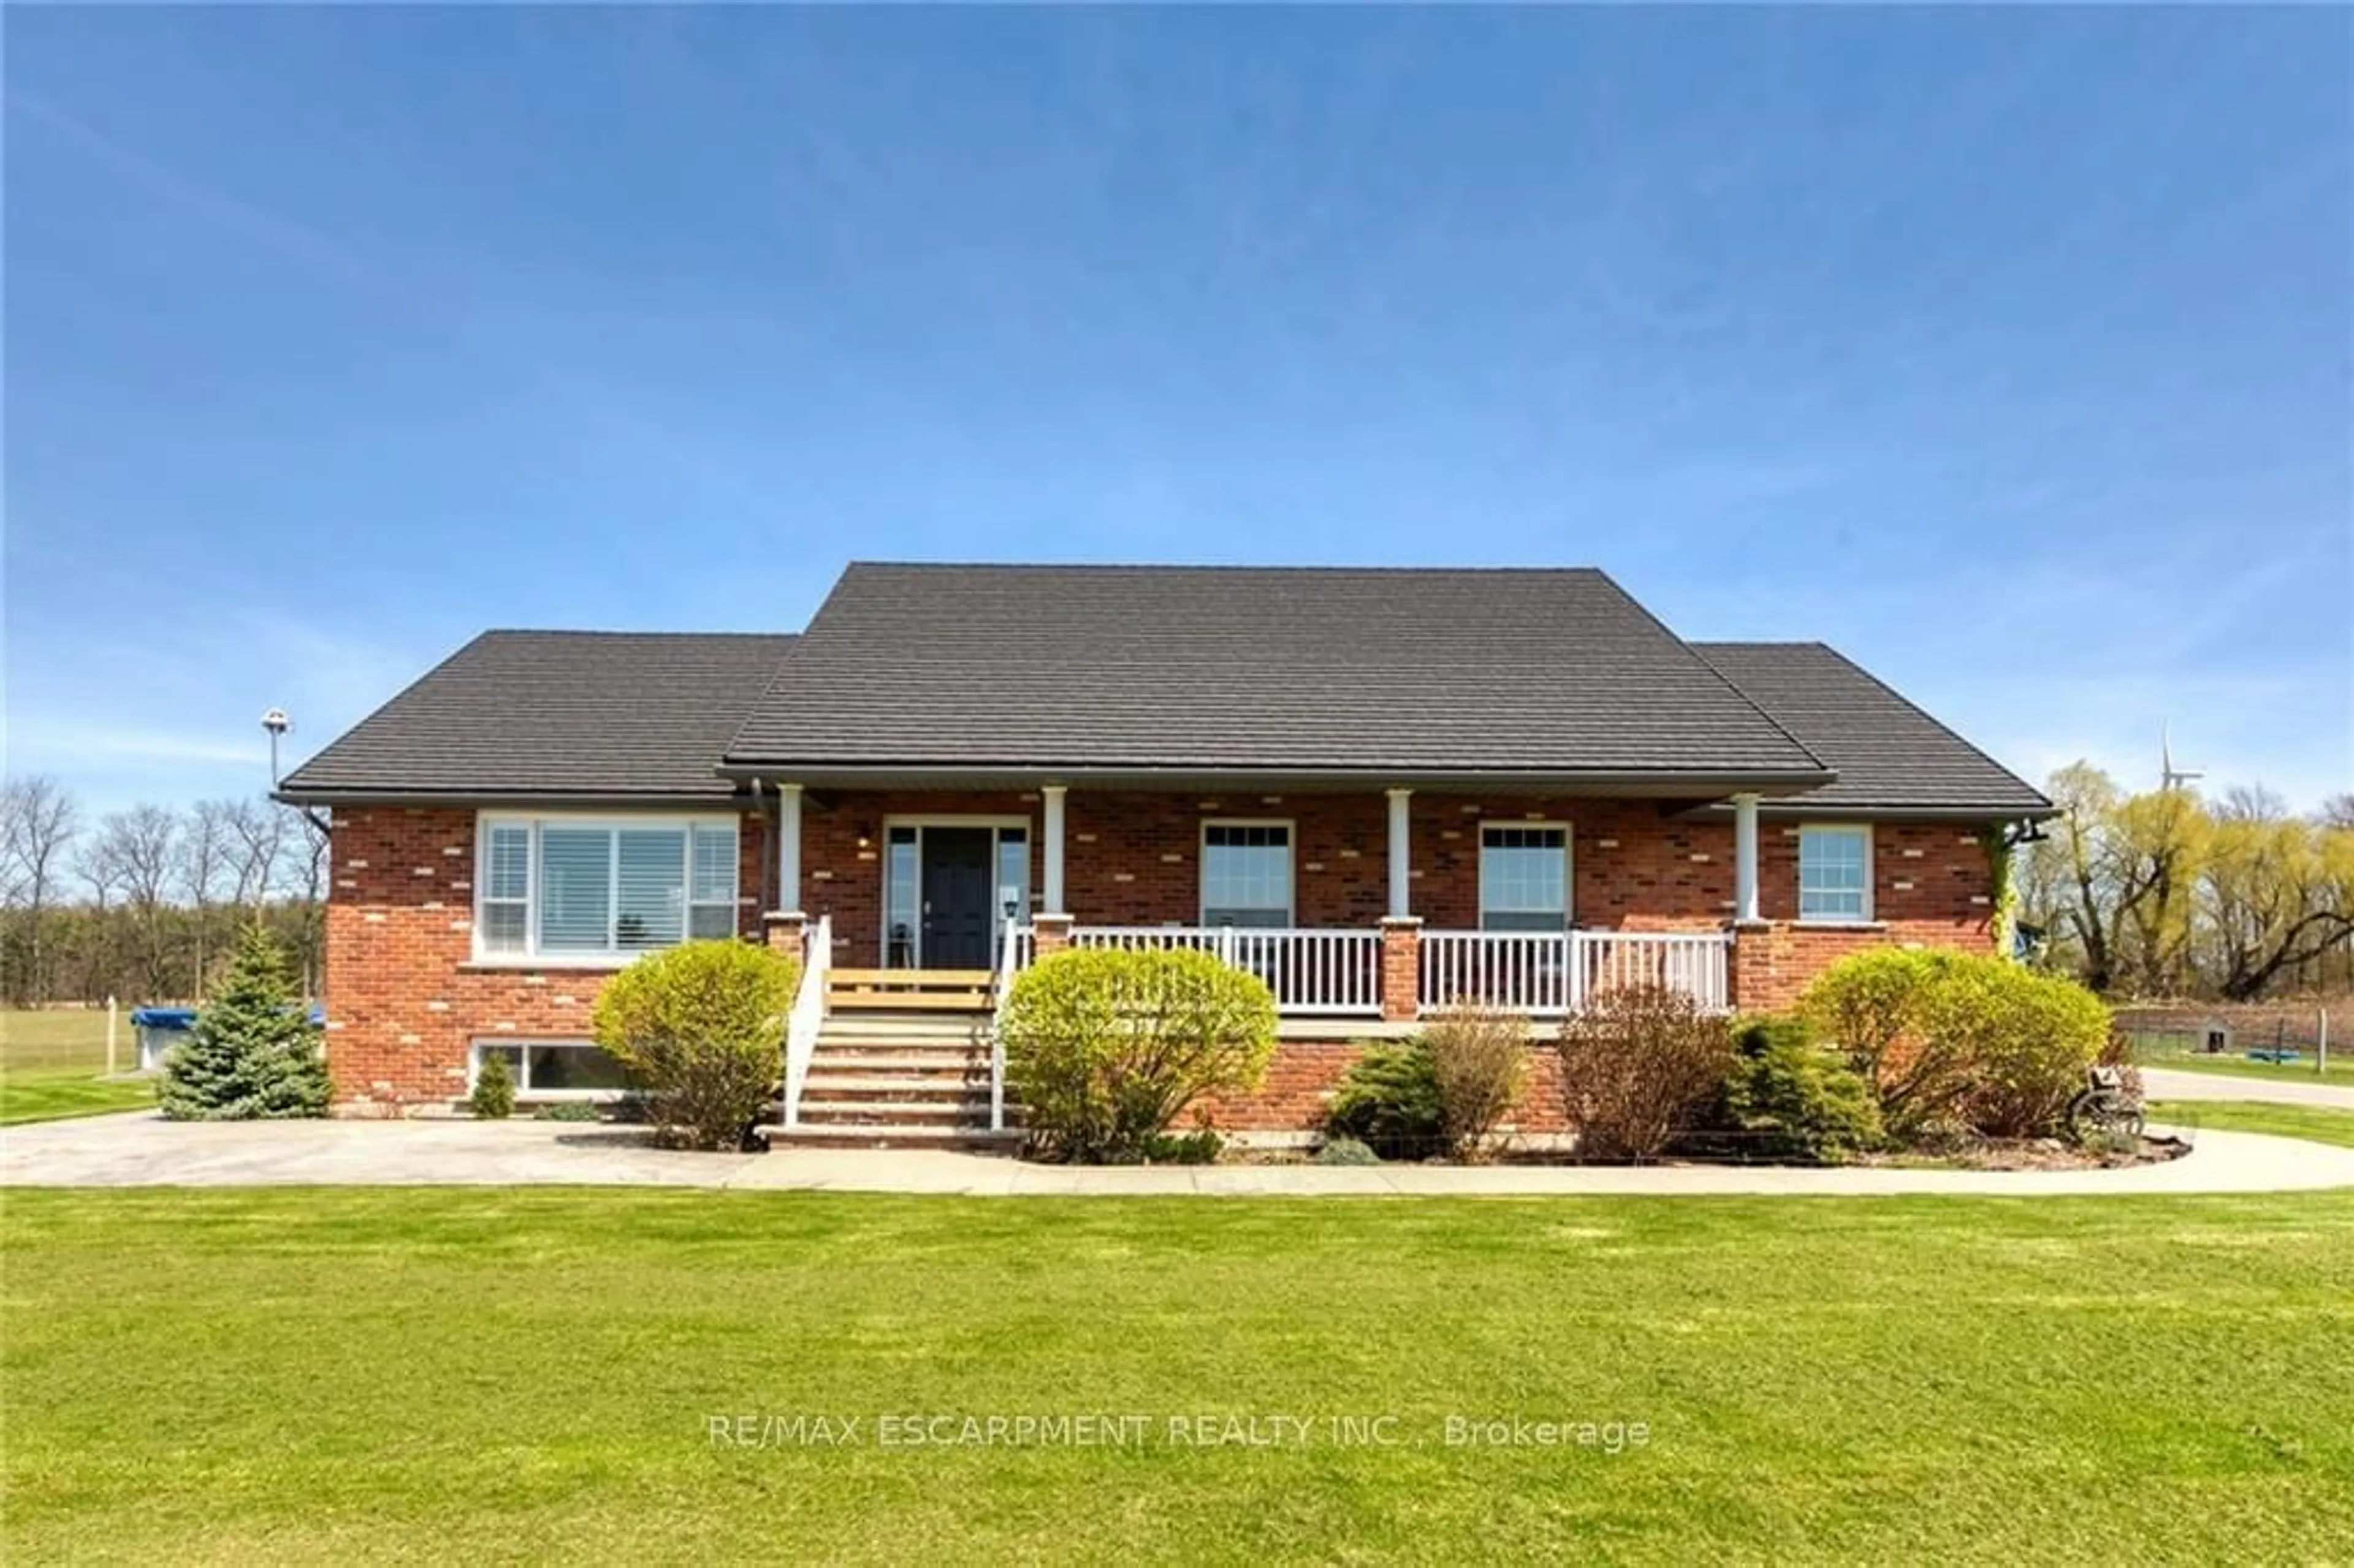 Home with brick exterior material for 626 Haldimand Rd #50, Haldimand Ontario N0A 1E0